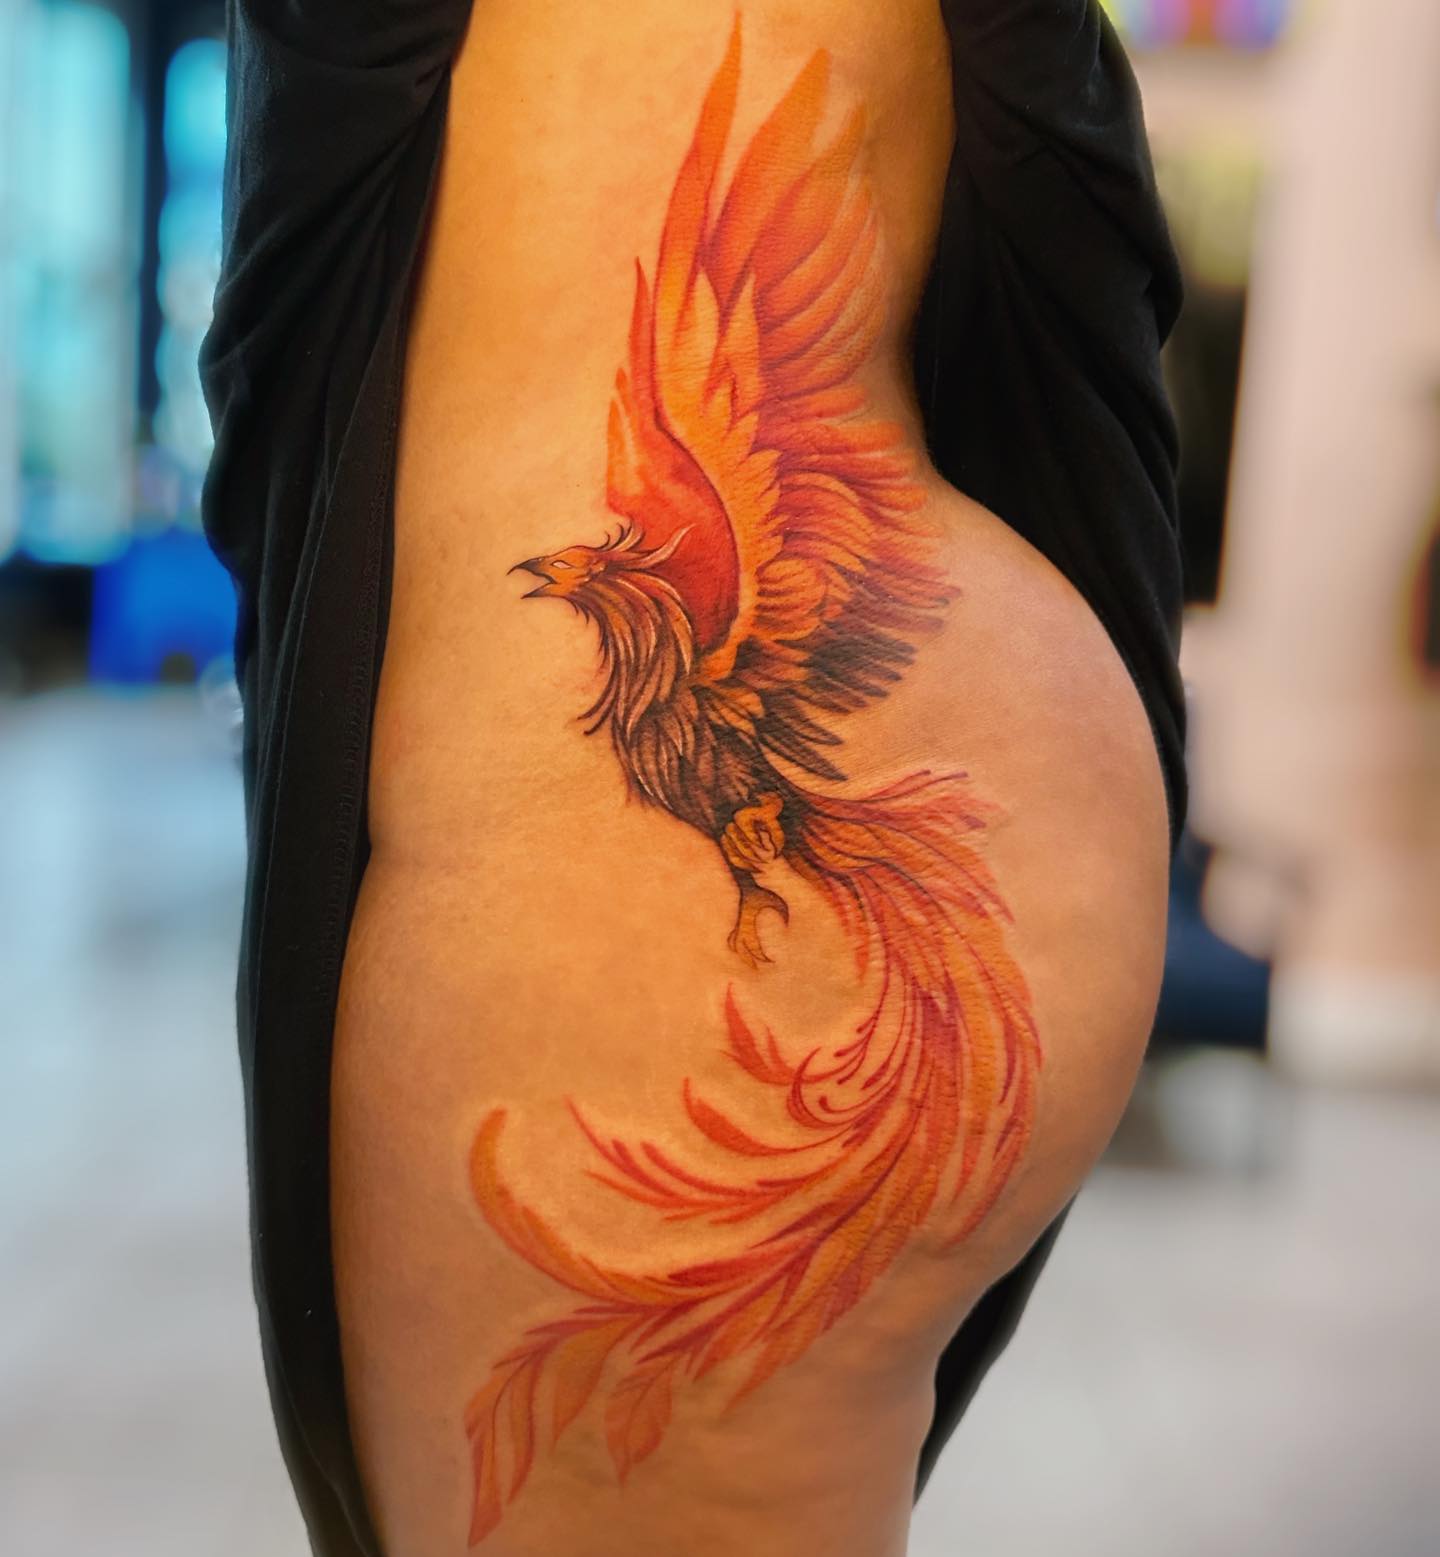 Stunning Phoenix Tattoo